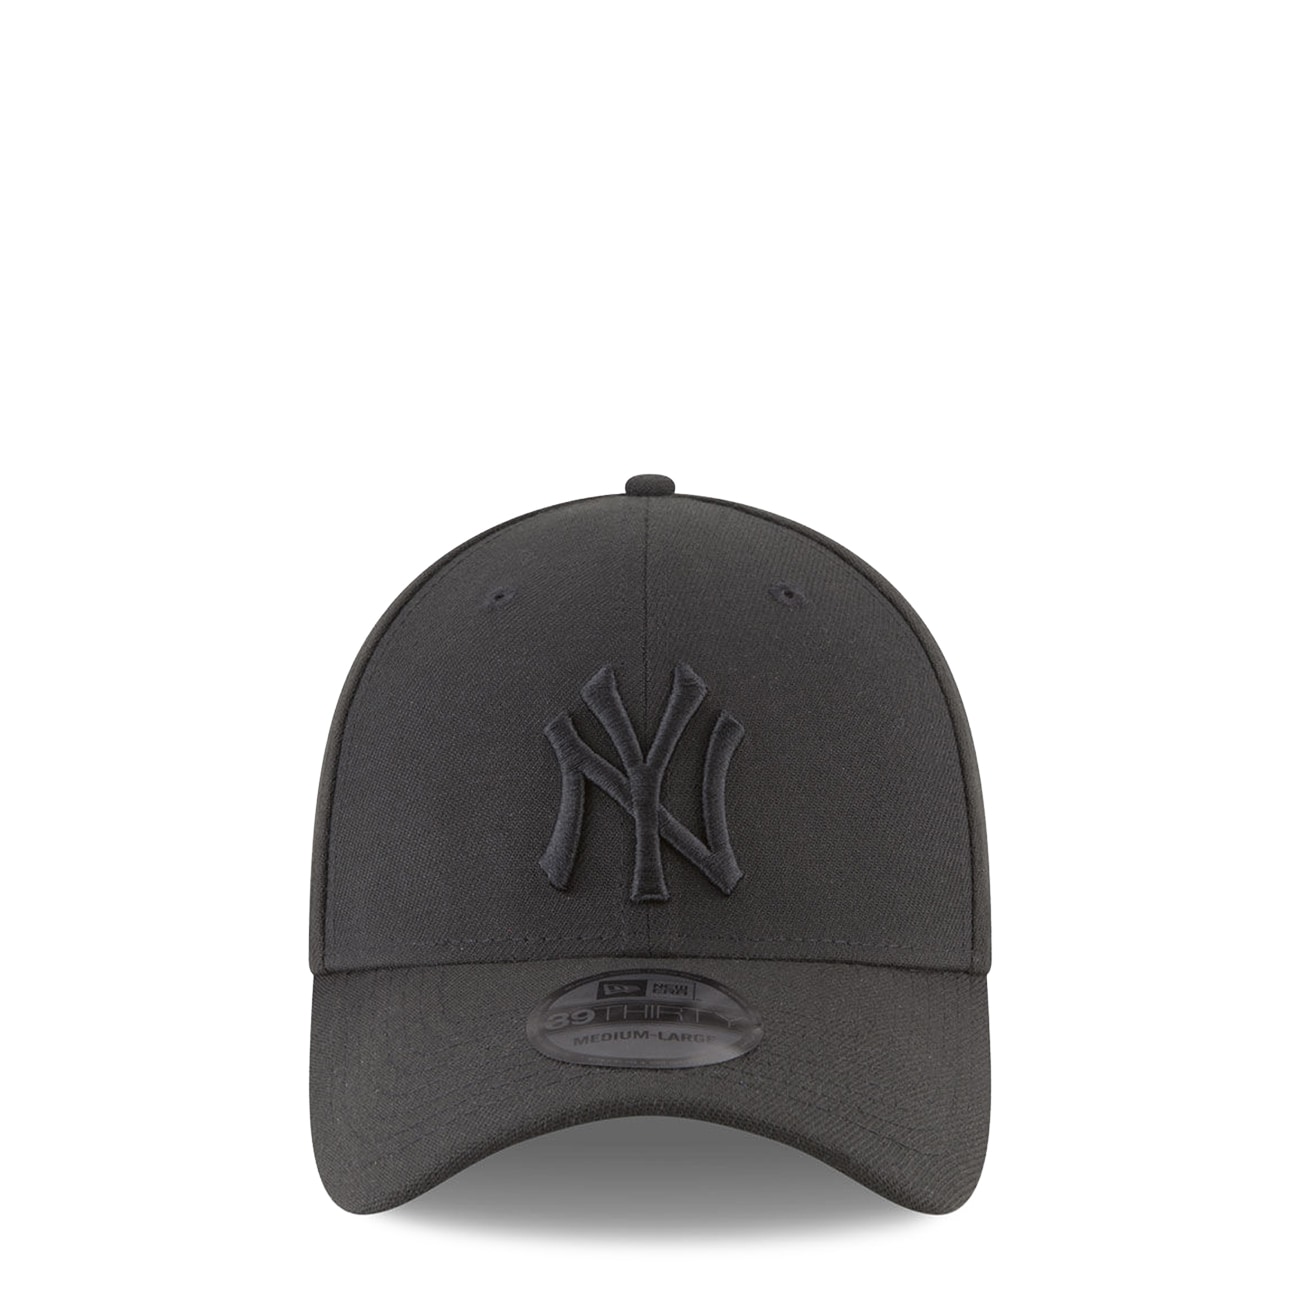 New York Yankees MLB Blackout 39THIRTY Stretch-Fit Cap